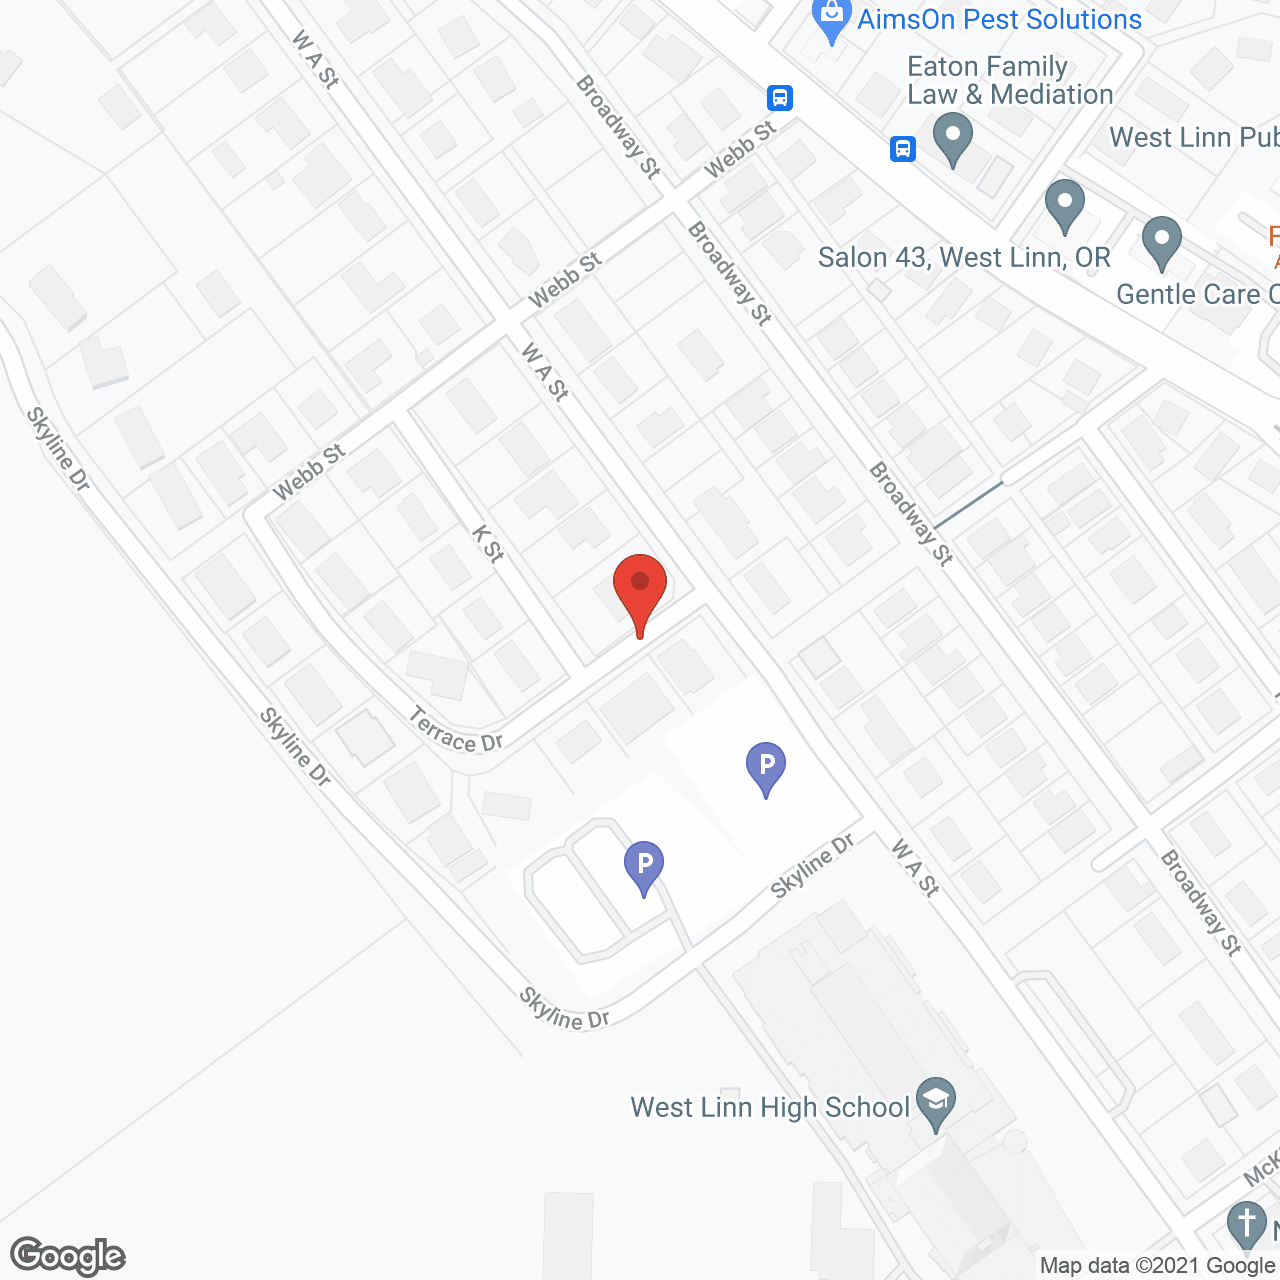 Bolton ACH in google map